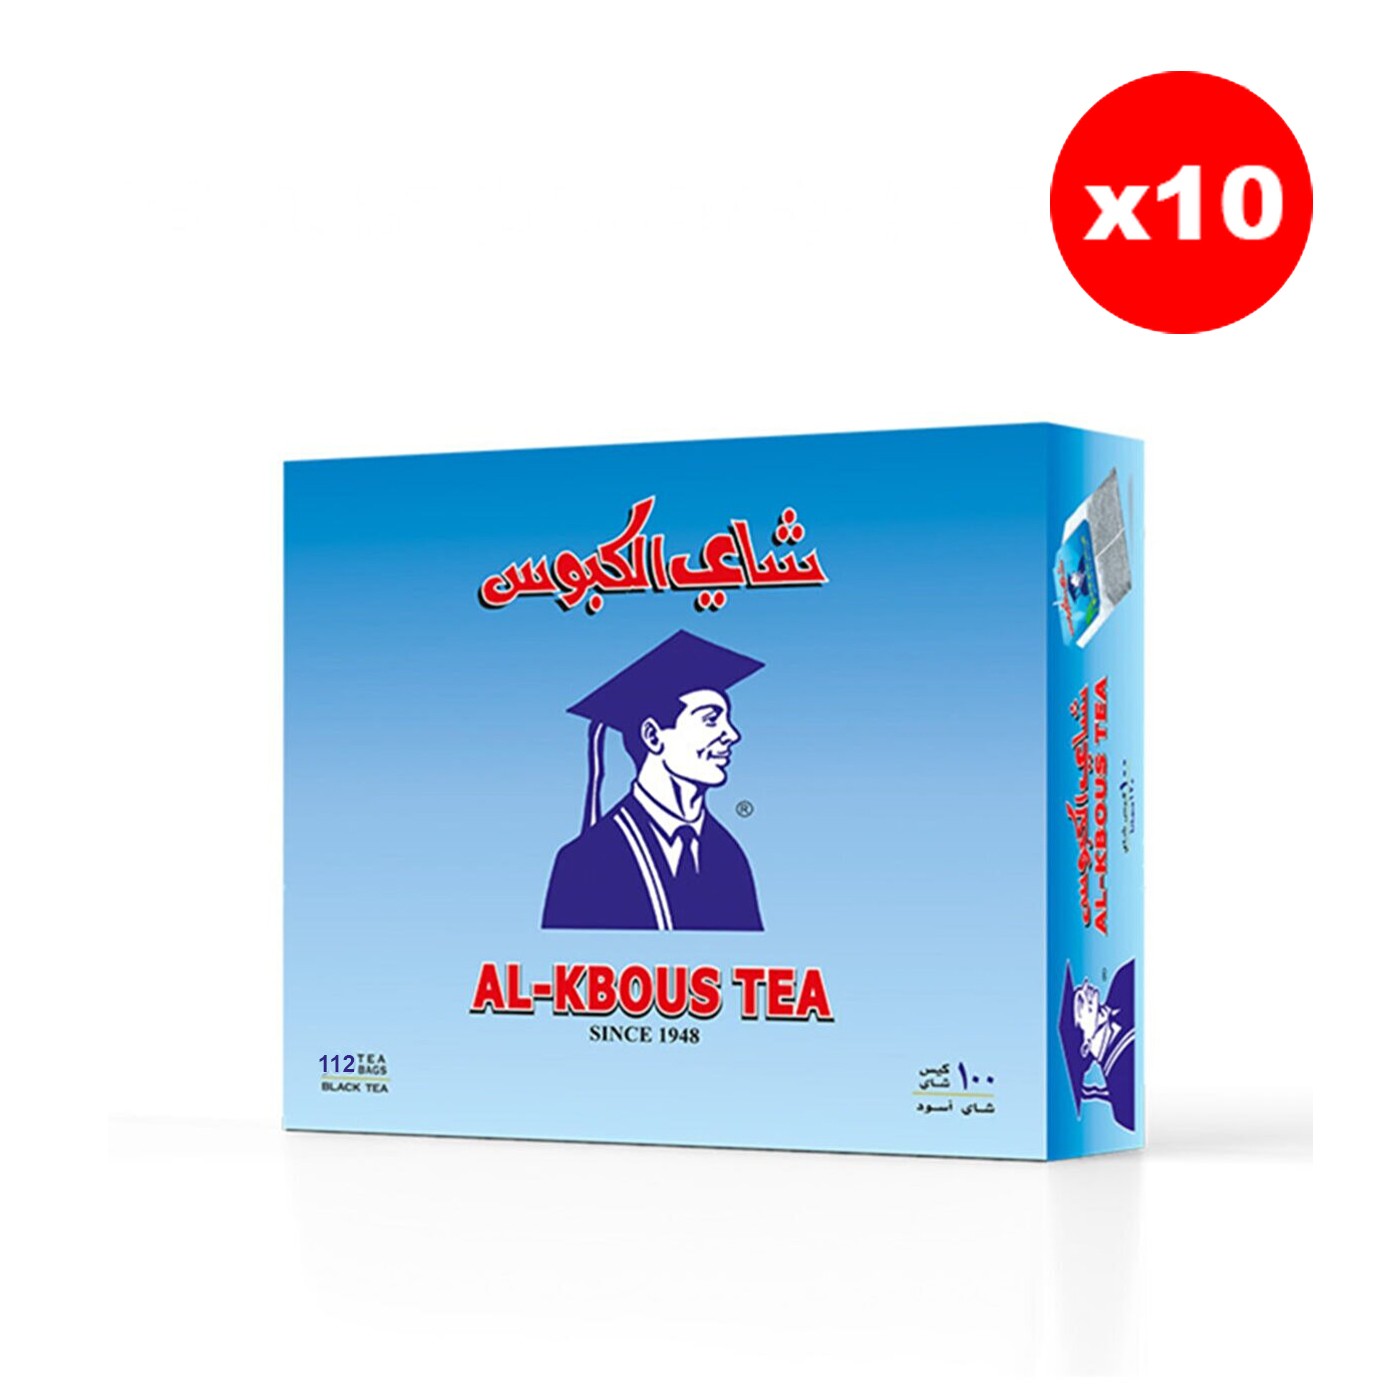 AL-KBOUS BLACK TEA 100-PACK TEA 10 BAGS